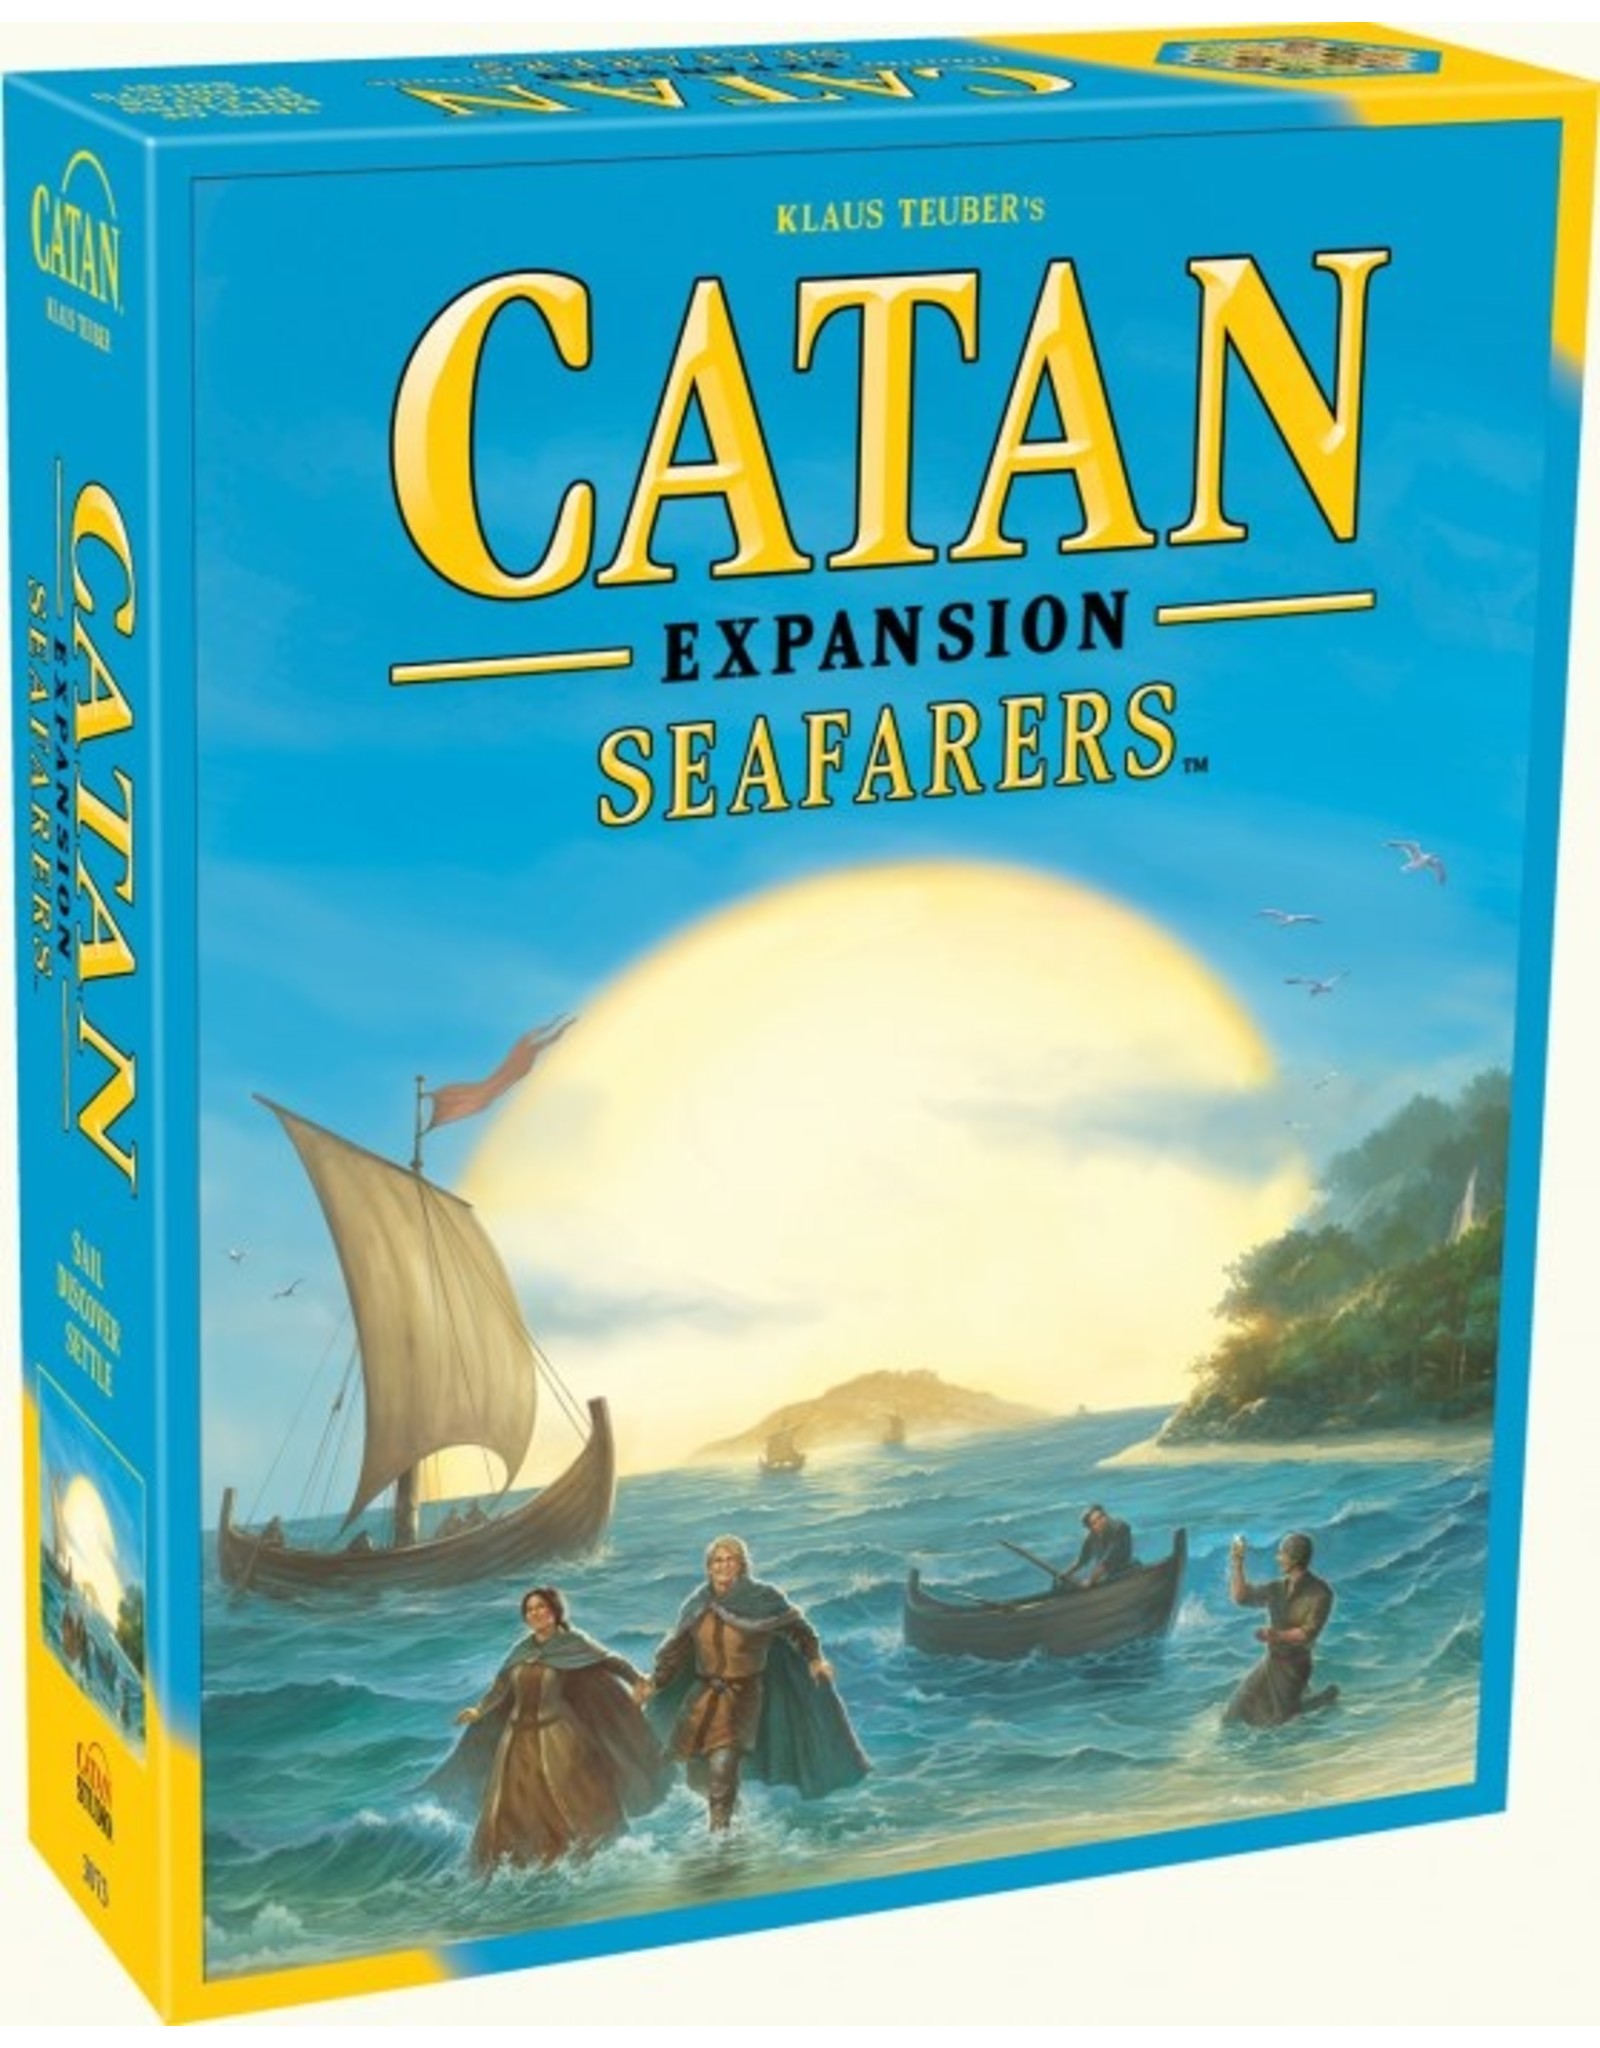 Catan Studio Catan: Seafarer's Expansion